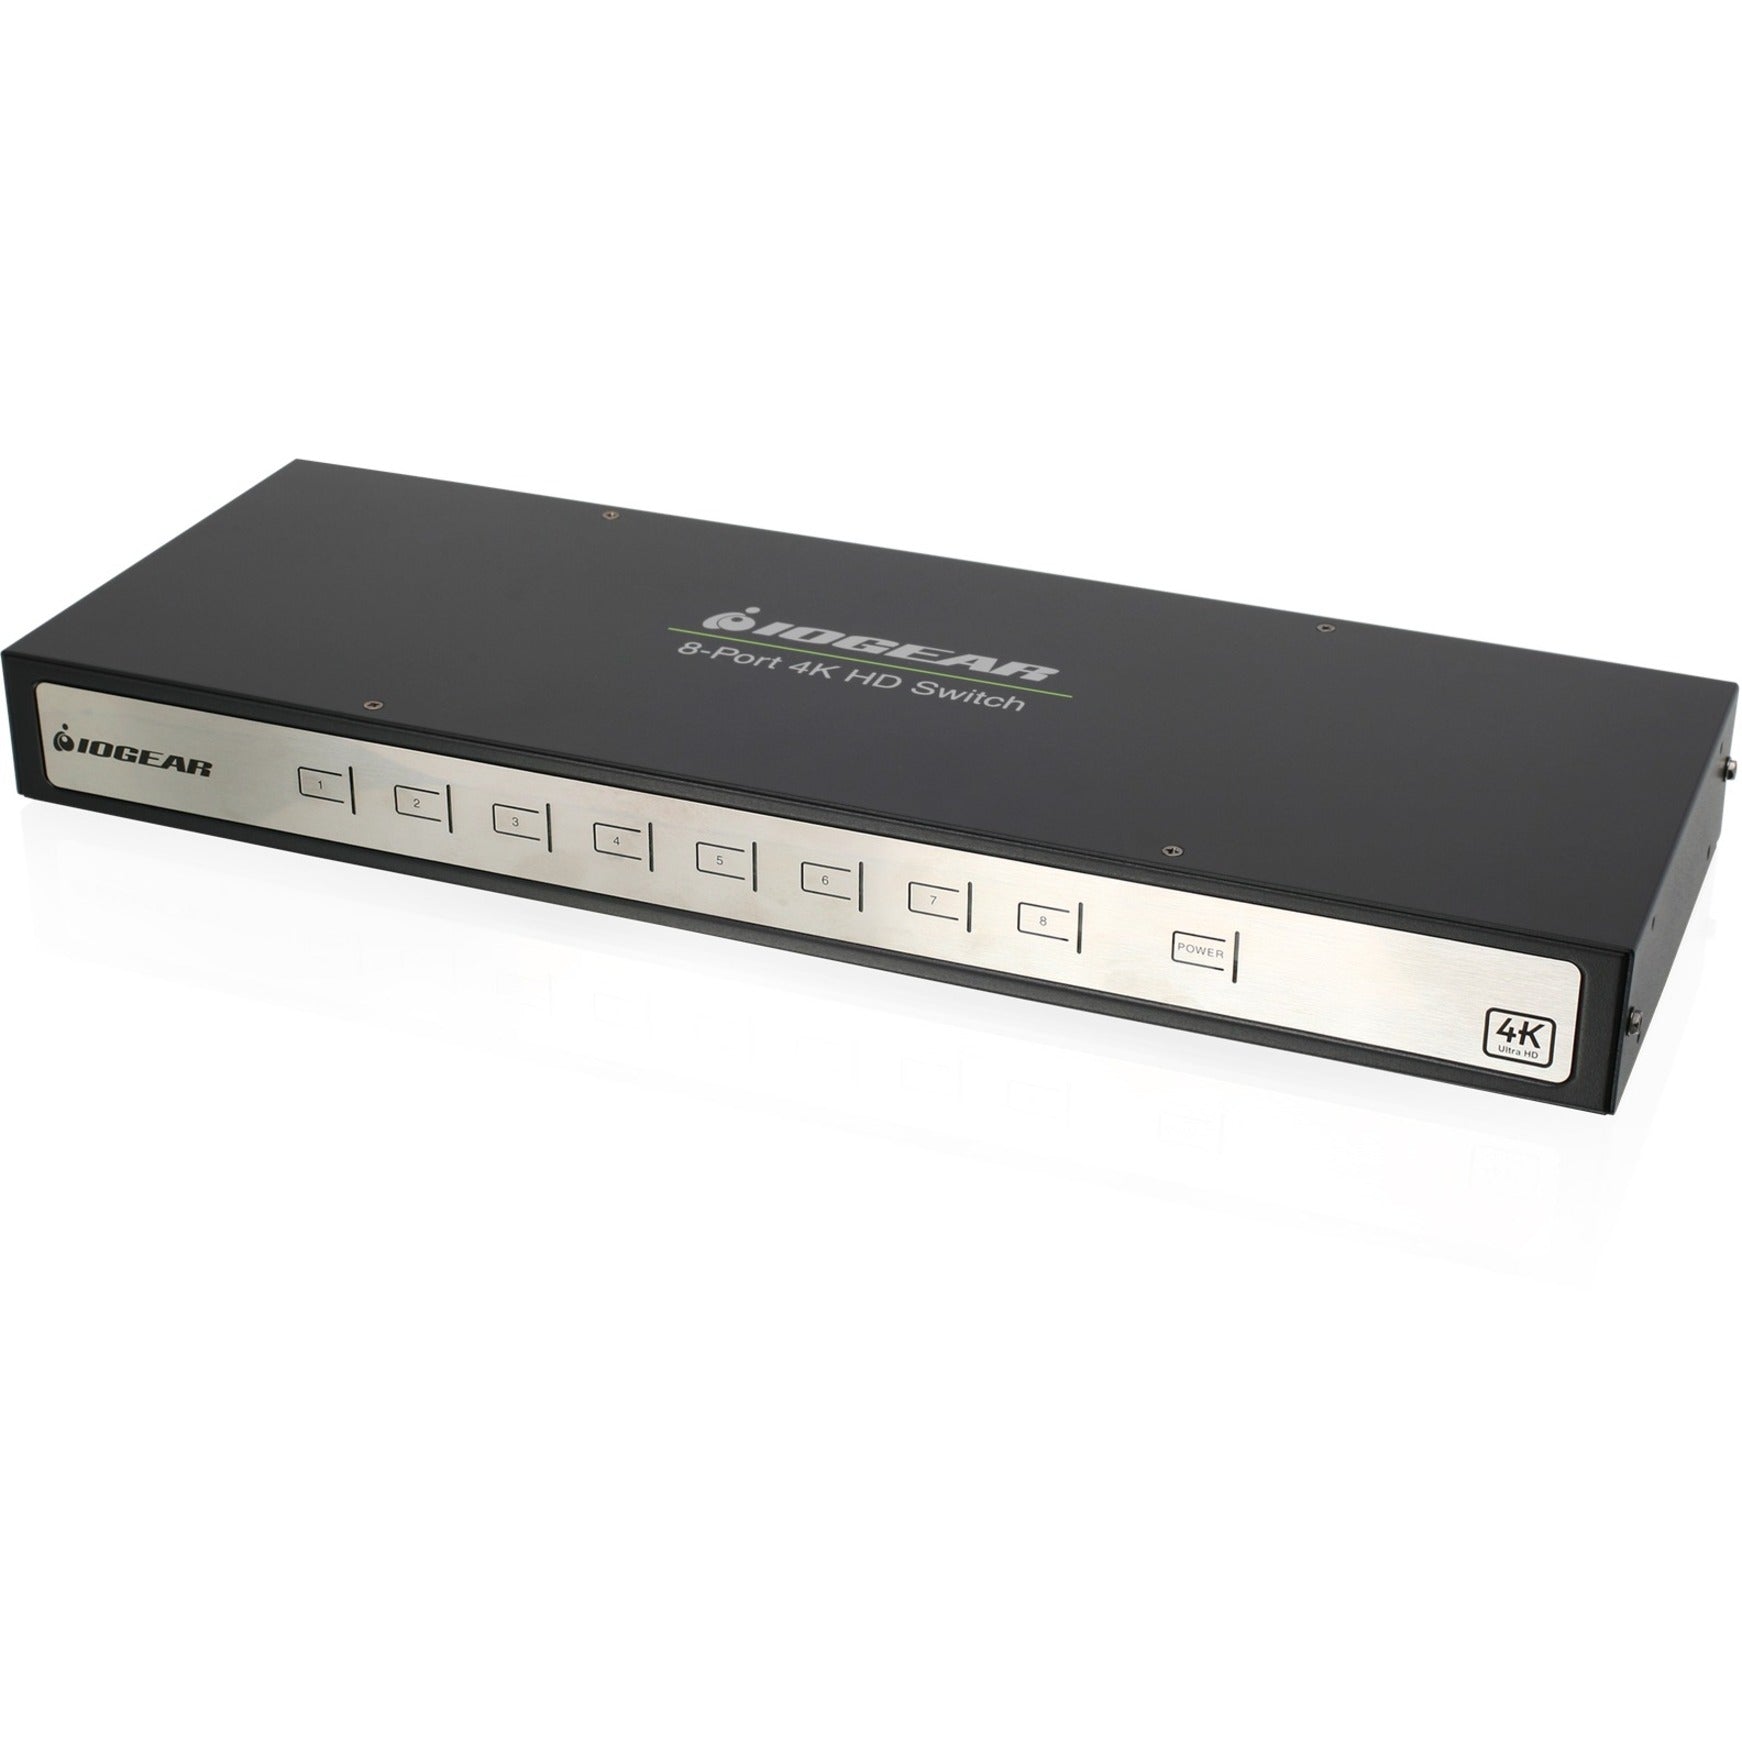 IOGEAR GHSW8481 True 4K 8-Port Switcher with HDMI Connection, 4096 x 2160 Video Resolution, 3 Year Warranty